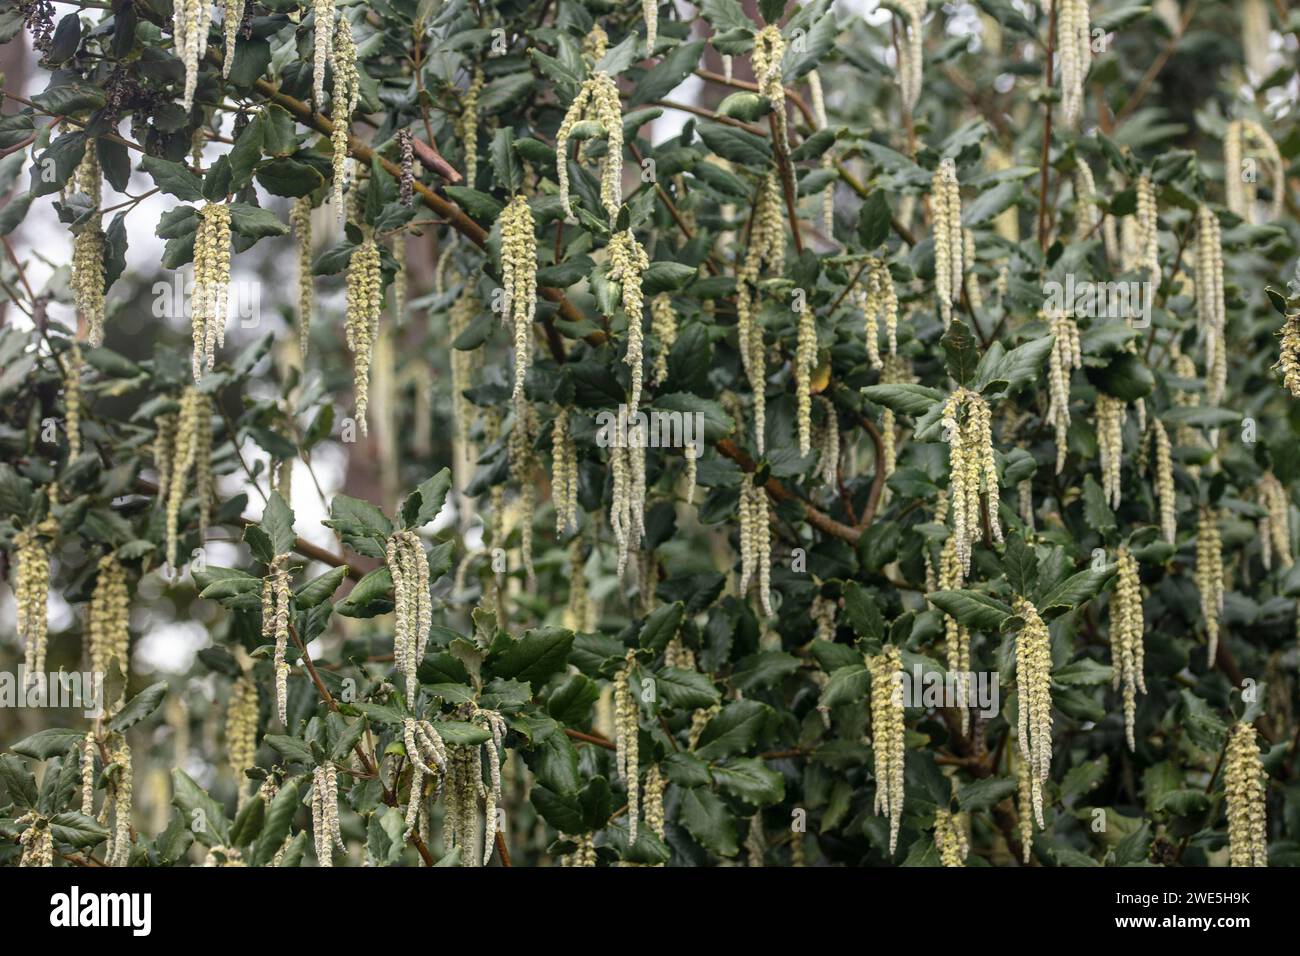 Dramatic Garrye Elliptica 'James Roof’. Natural close up high resolution dramatic plant portrait Stock Photo